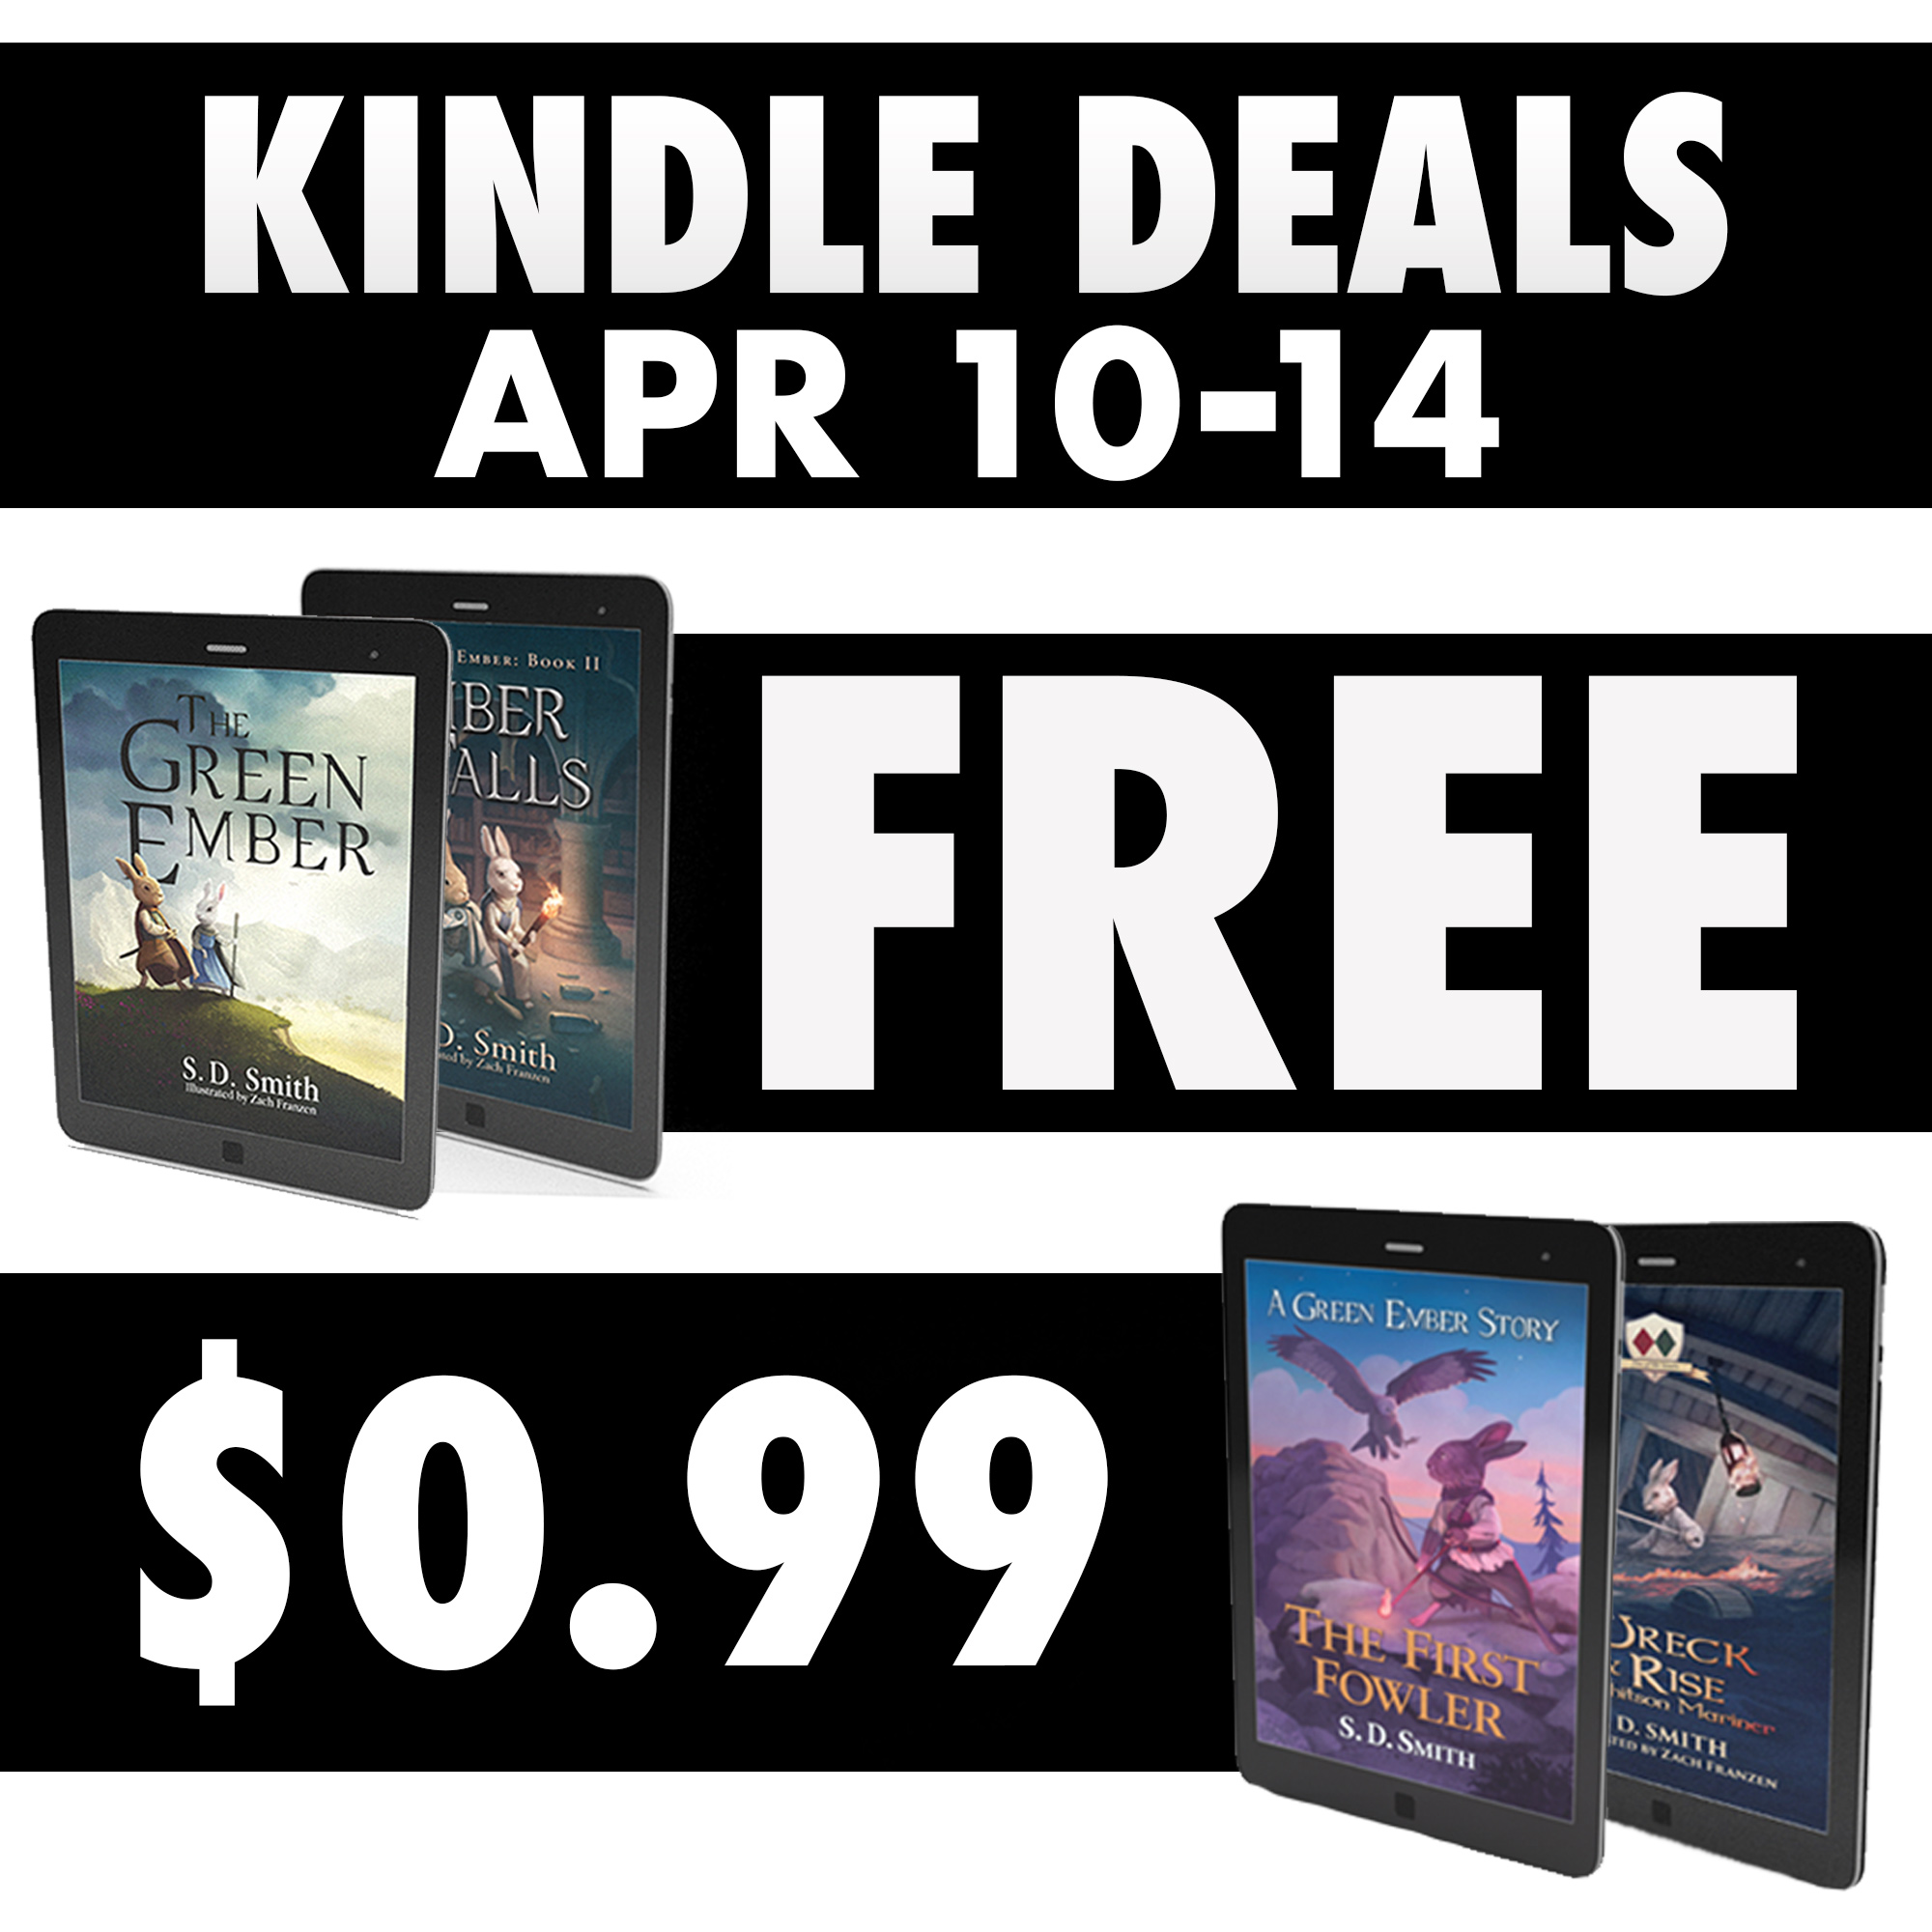 FREE GREEN EMBER! Kindle FREE + 99¢ Deals April 10-17